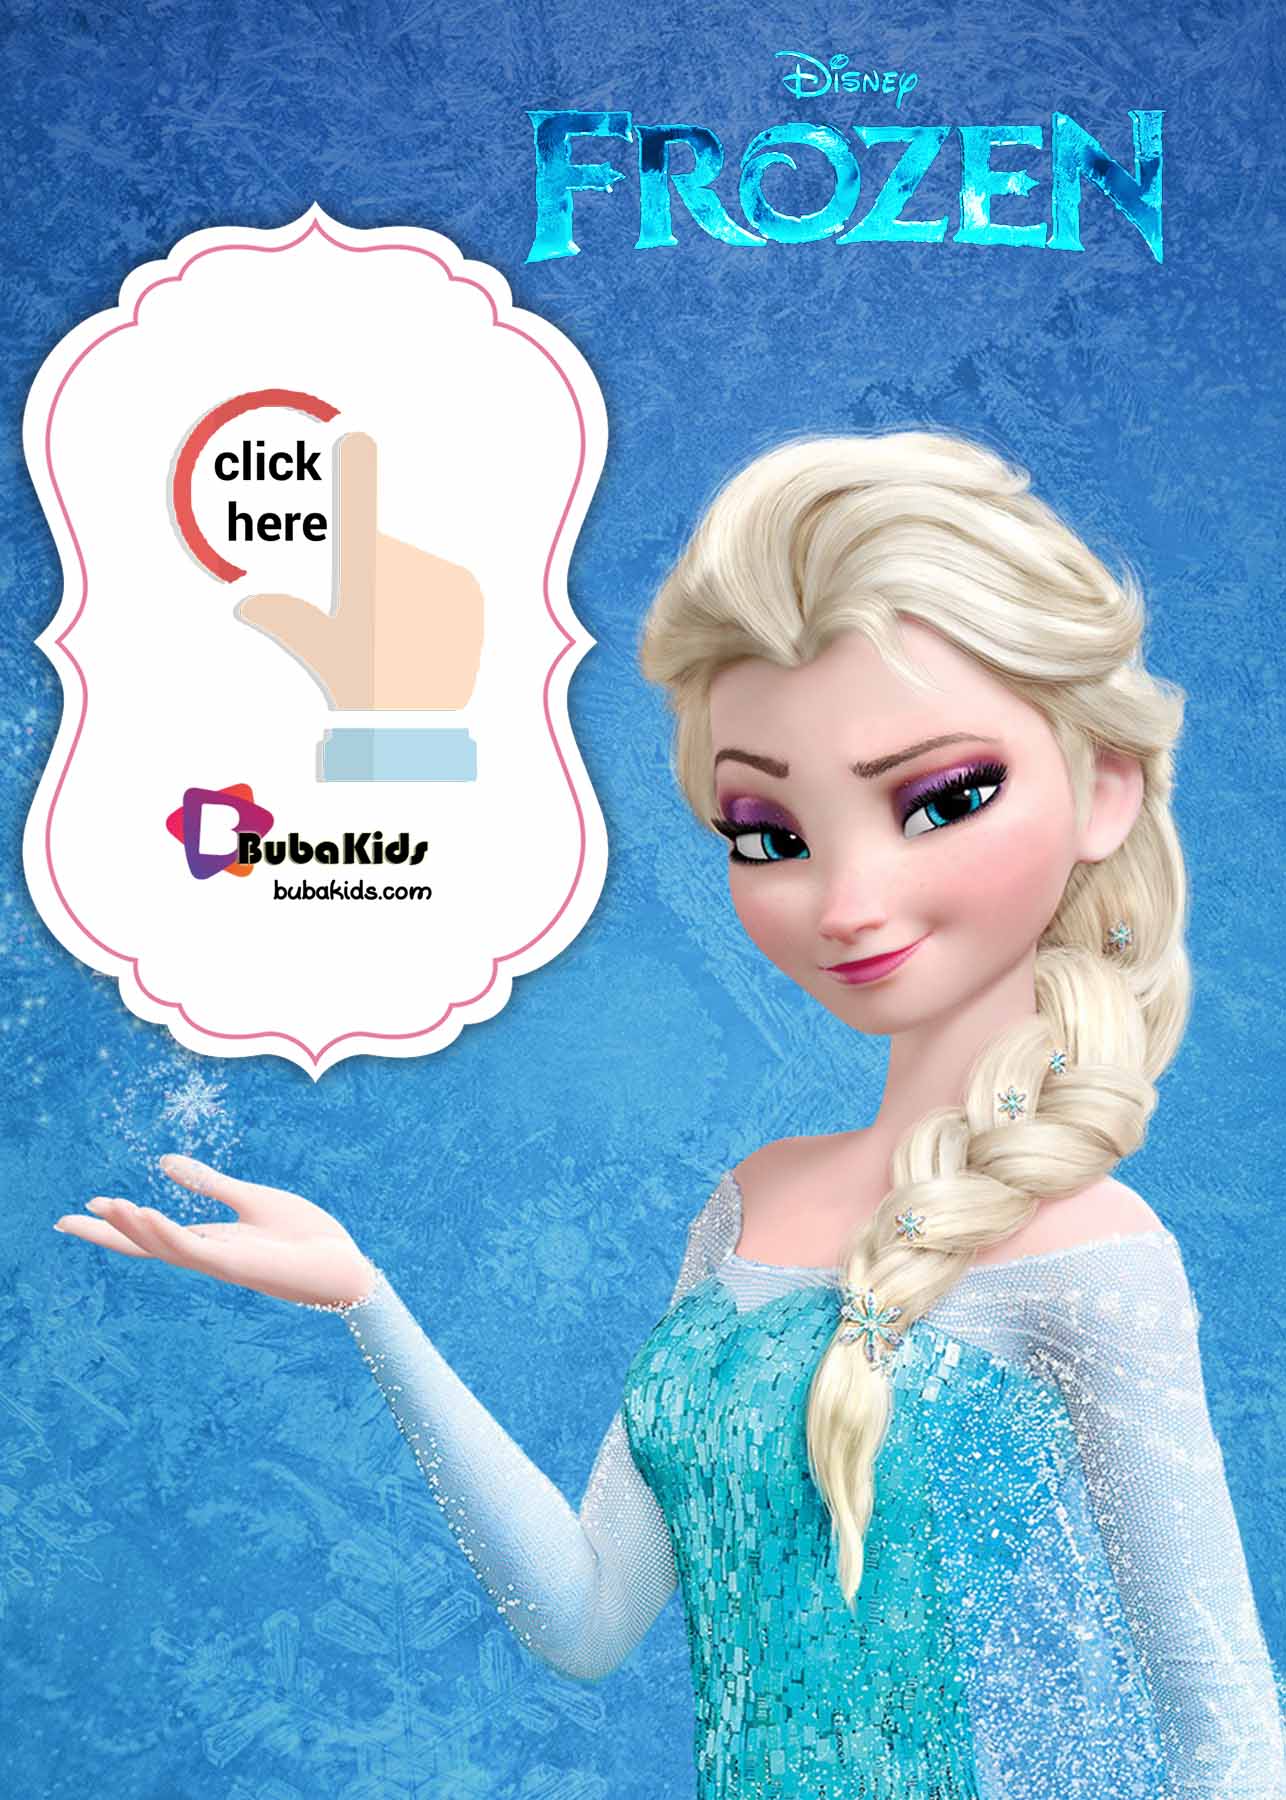 Free Disney Frozen Birthday Invitation Card Size 4×6 Wallpaper